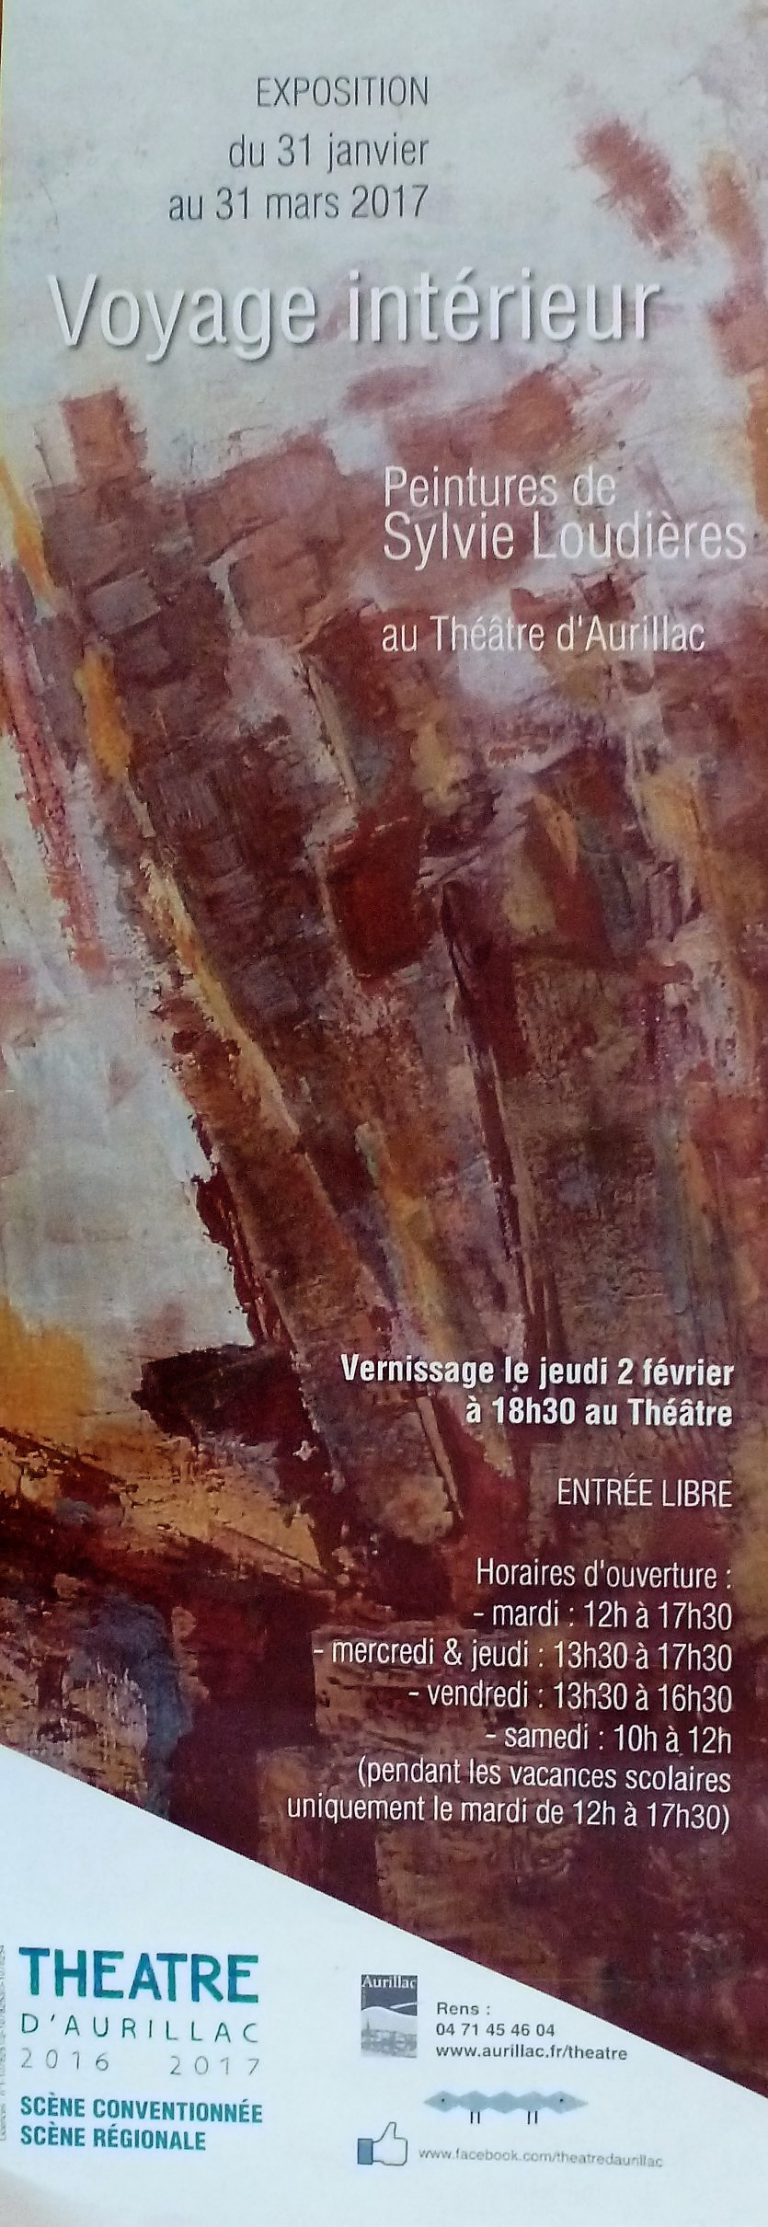 Sylvie LOUDIERES Théatre aurillac Exposition